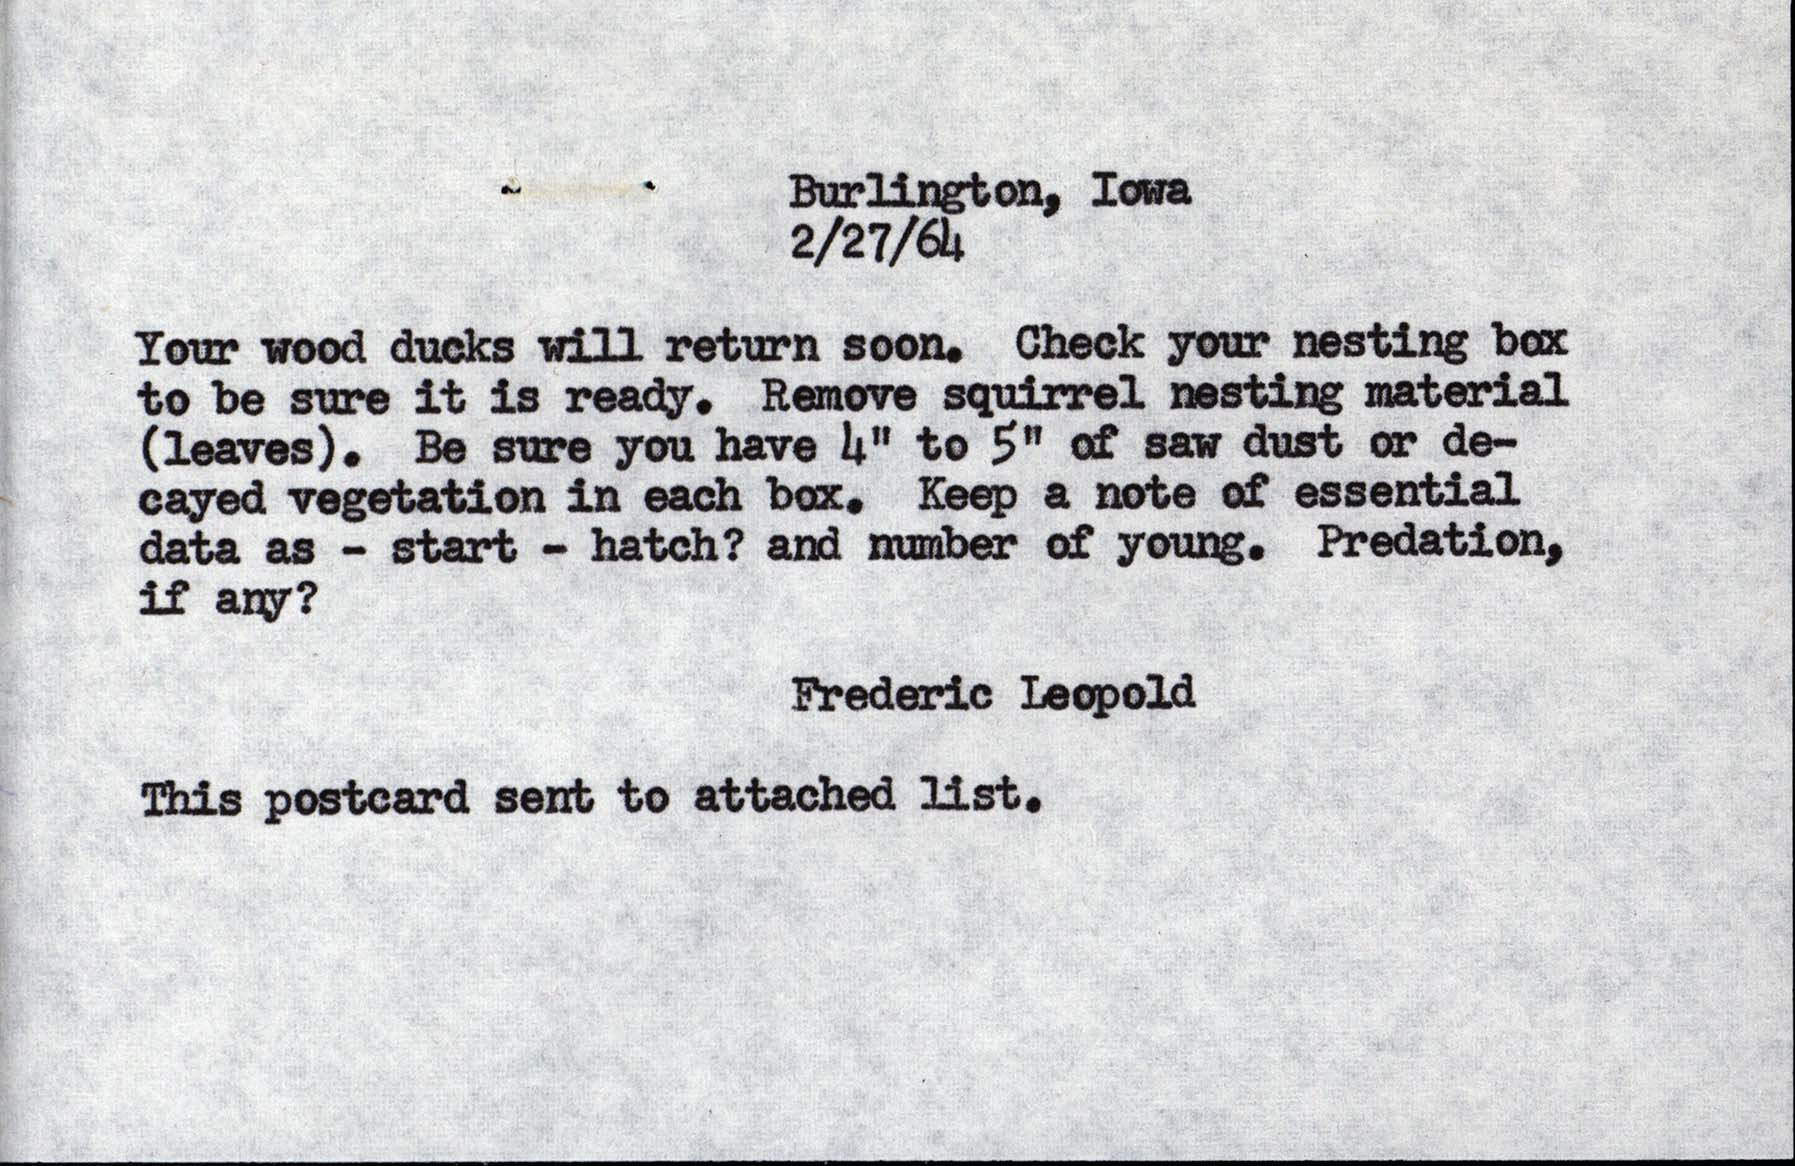 Documents regarding a Wood Duck study, February 27, 1964